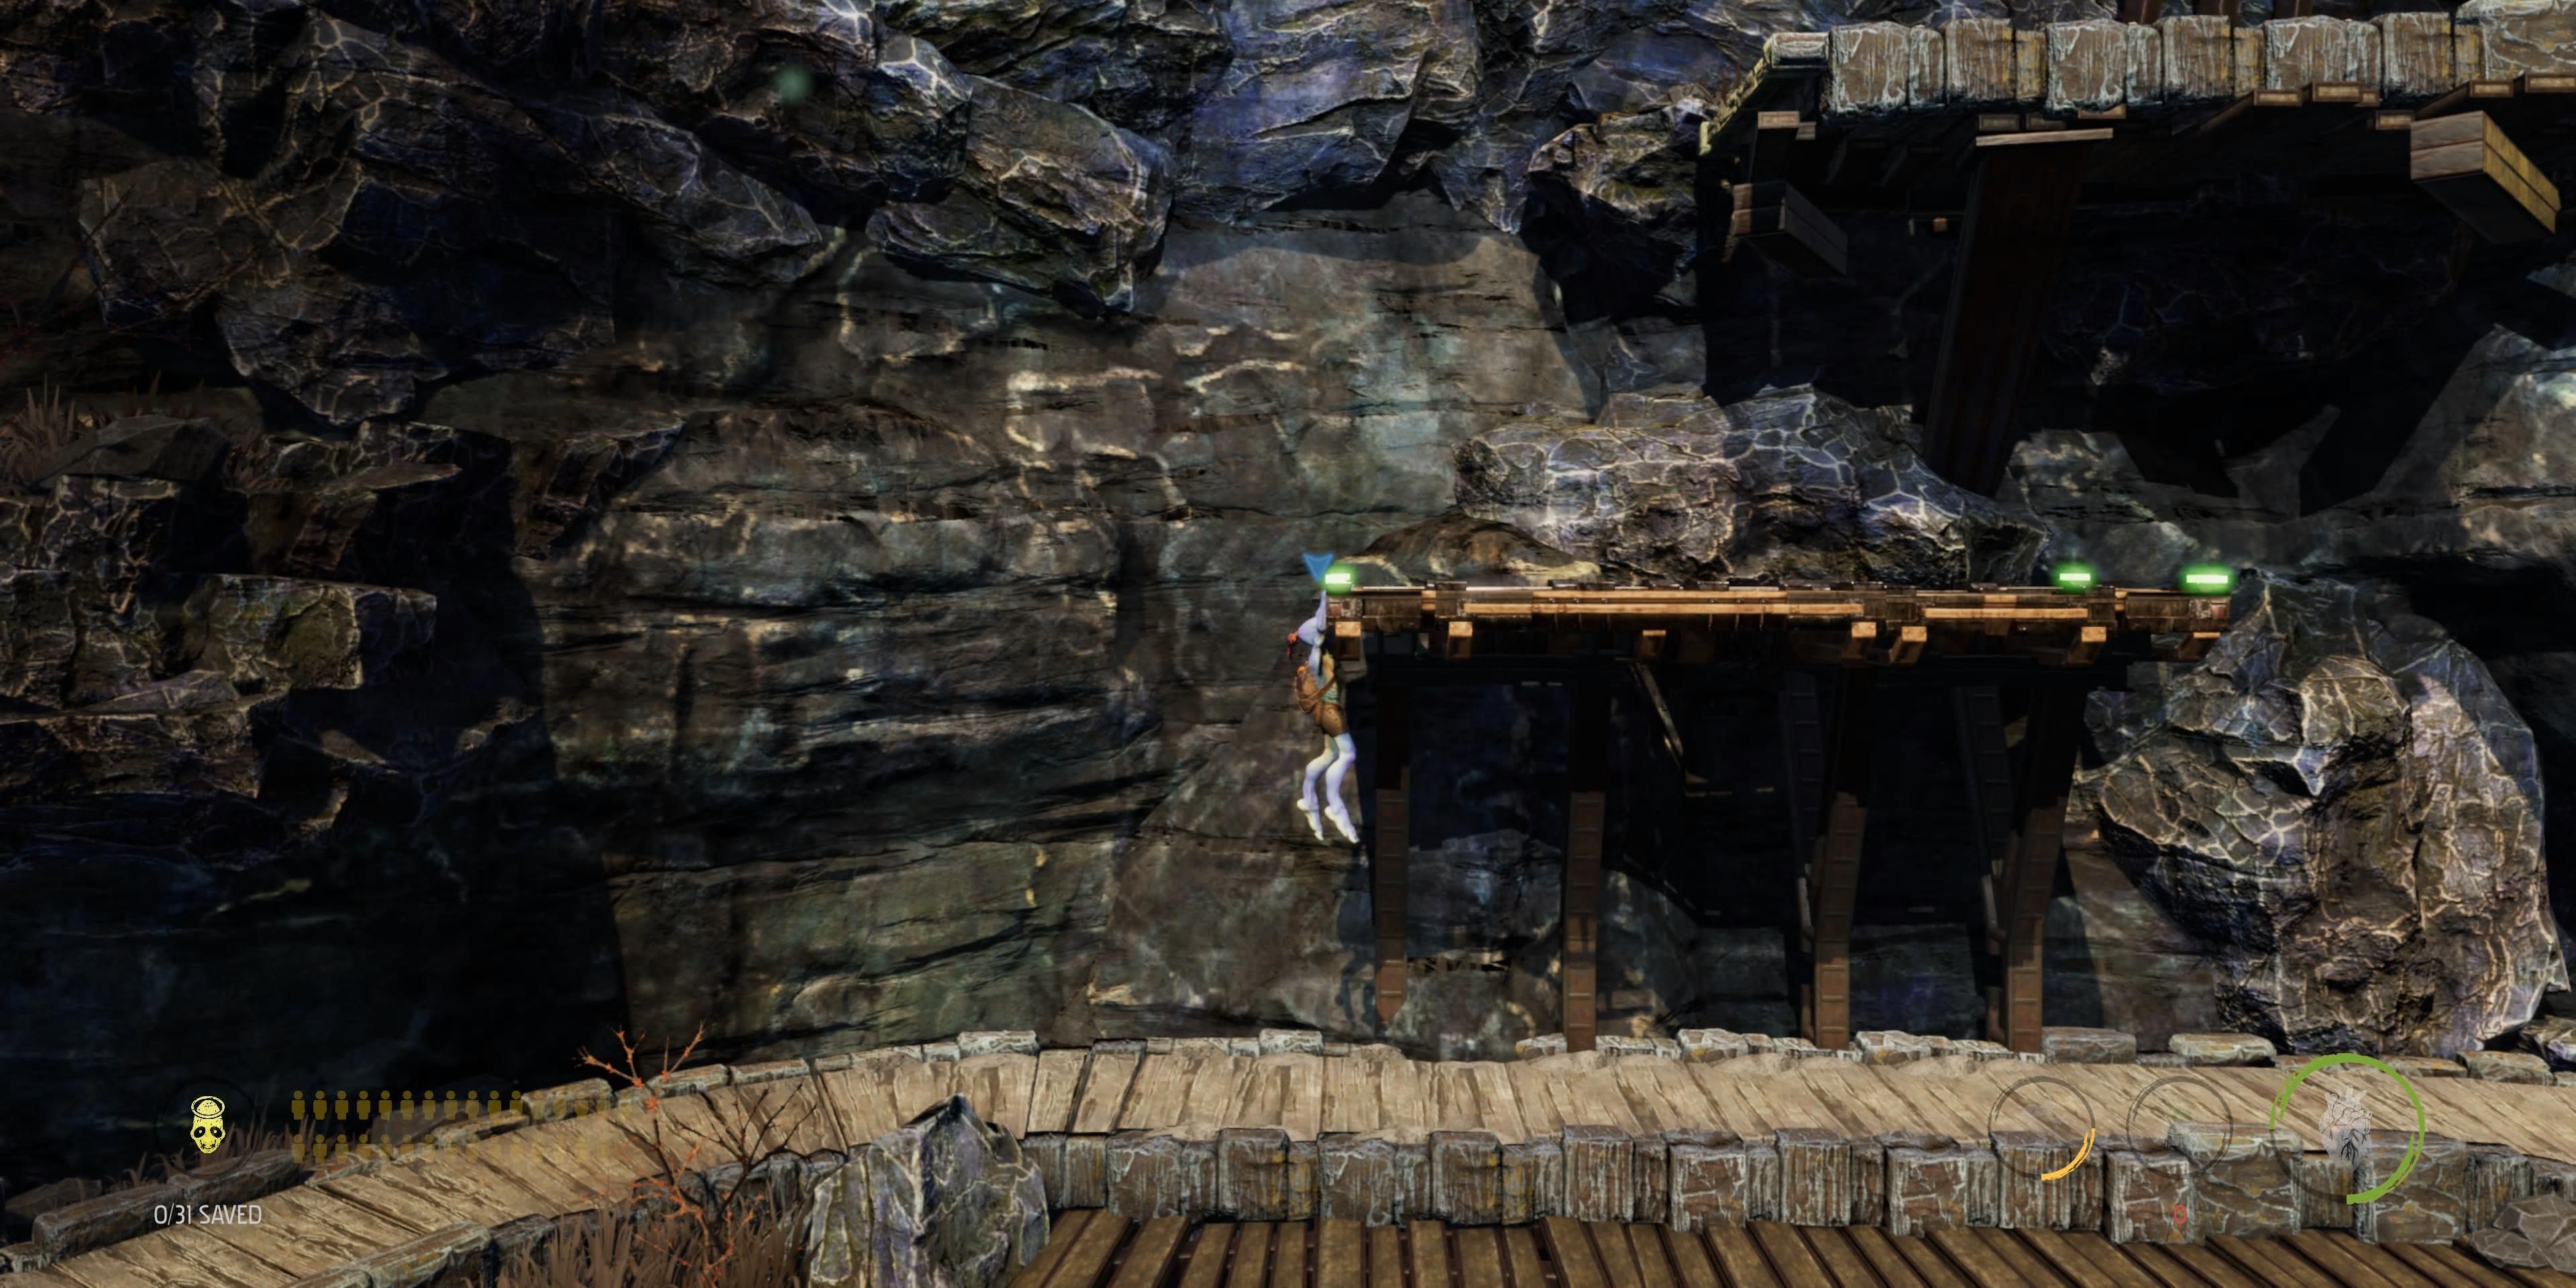 Abe climbing up a platform in Oddworld Soulstorm